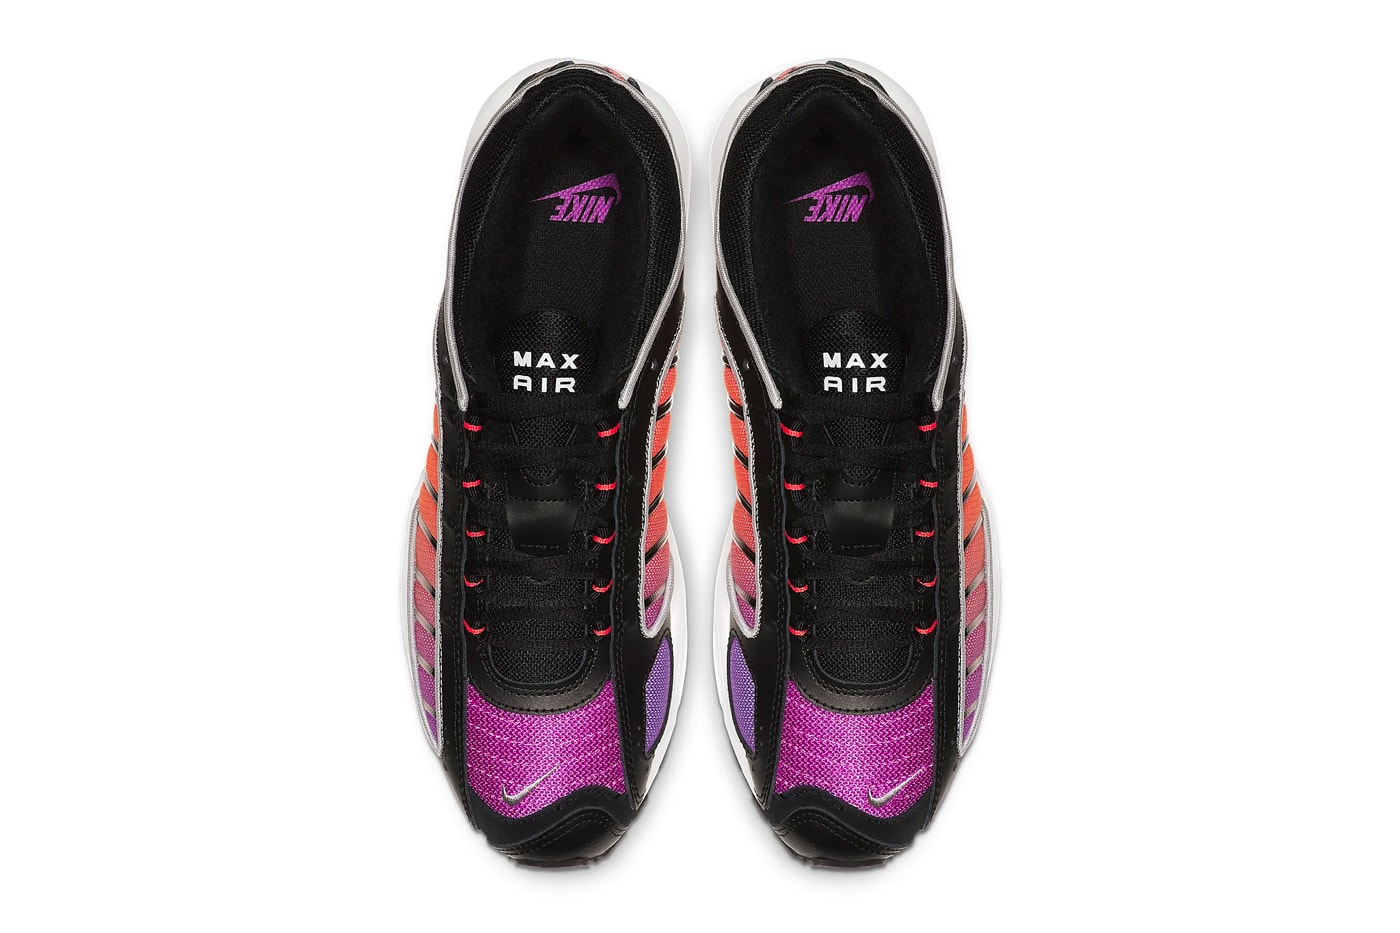 Nike Air Max Tailwind IV 4 Black Bright Crimson Bright Ceramic  release info price date AQ2567-002 nike.com webstore stockist buy now 